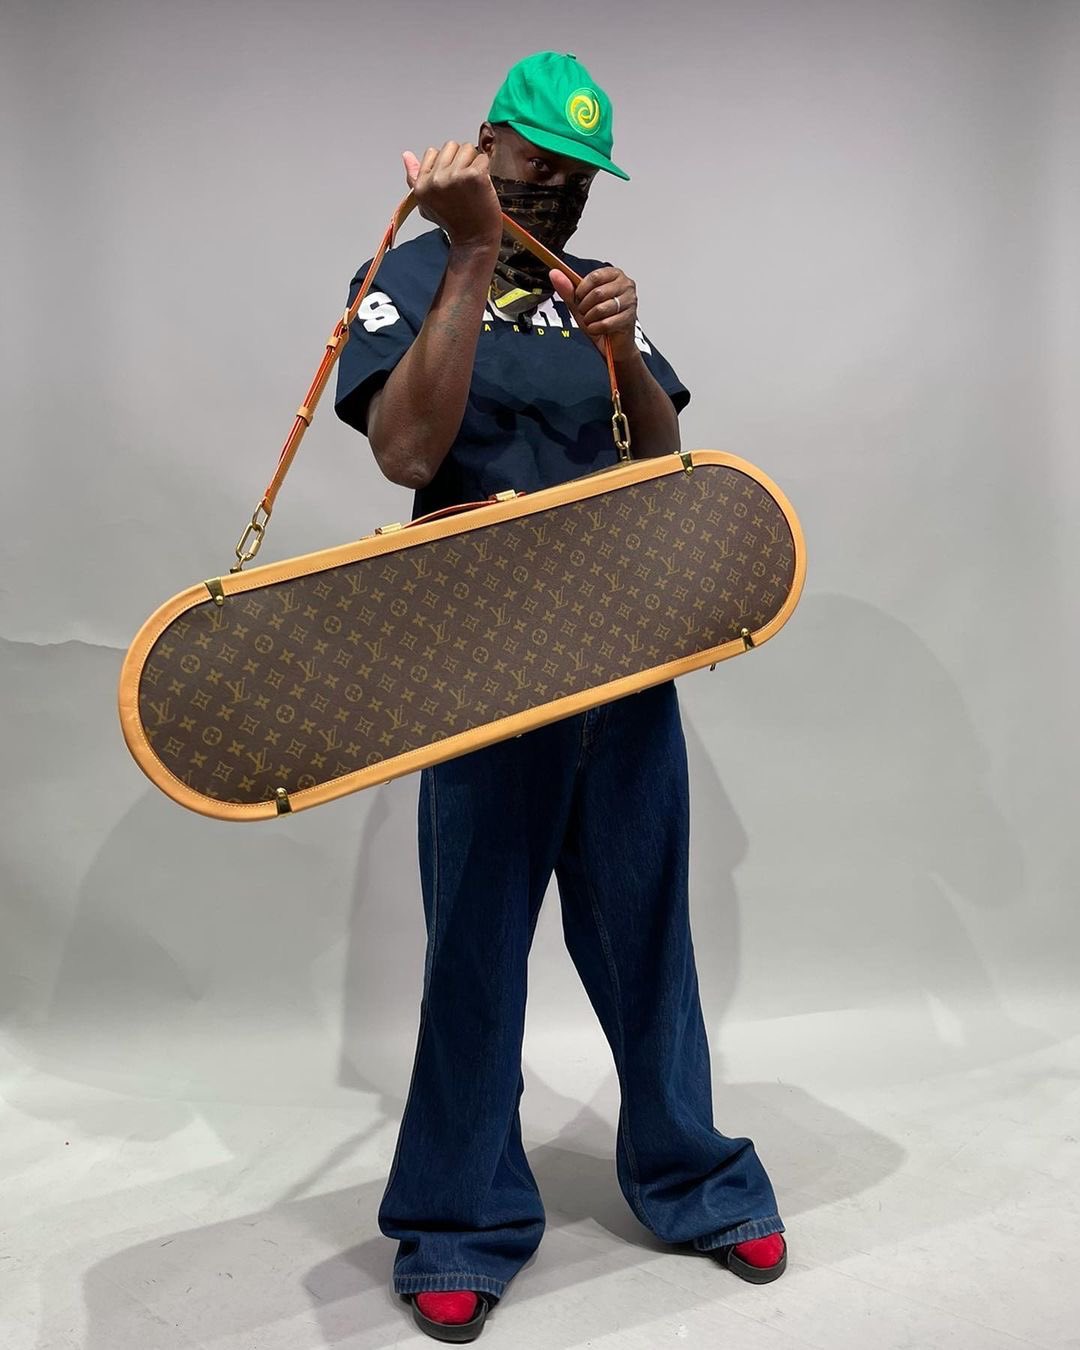 Ovrnundr on X: Virgil Abloh Louis Vuitton Skateboard Bag Photo:  @special____project  / X